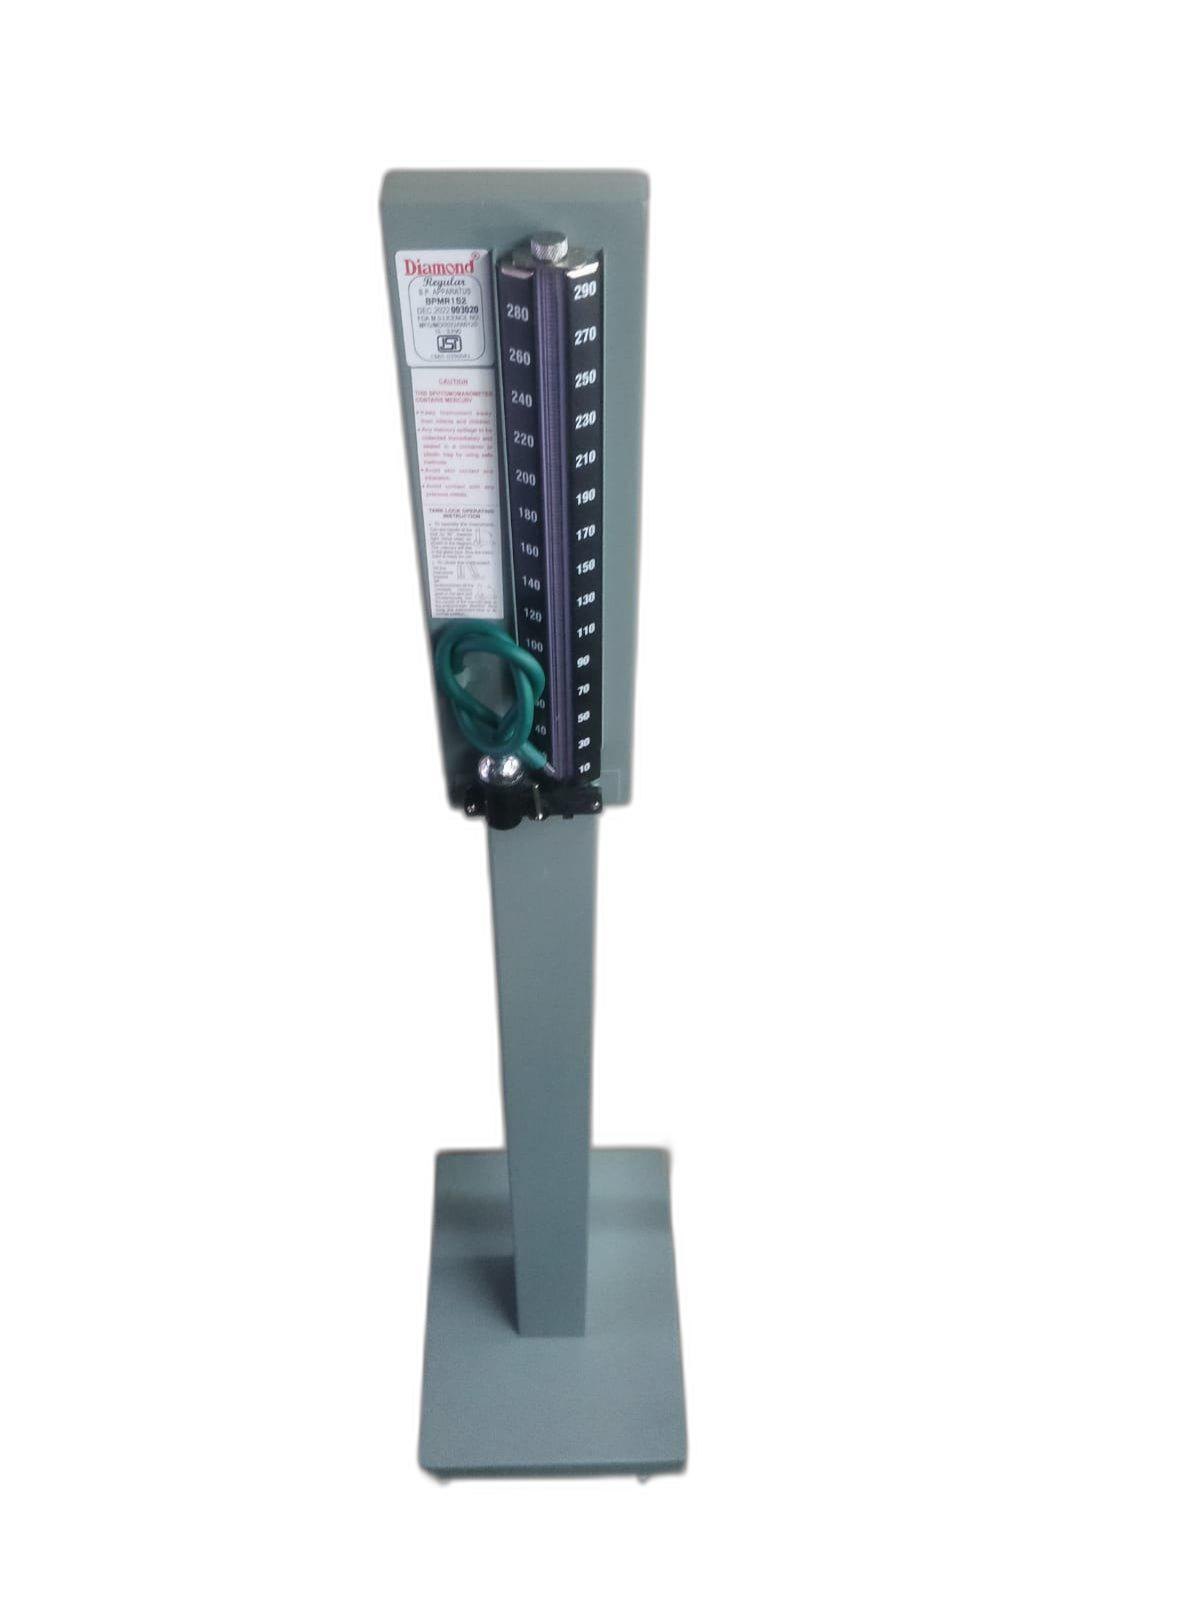 Diamond Mercury Blood Pressure Monitor with Stand (Bpmr 152)